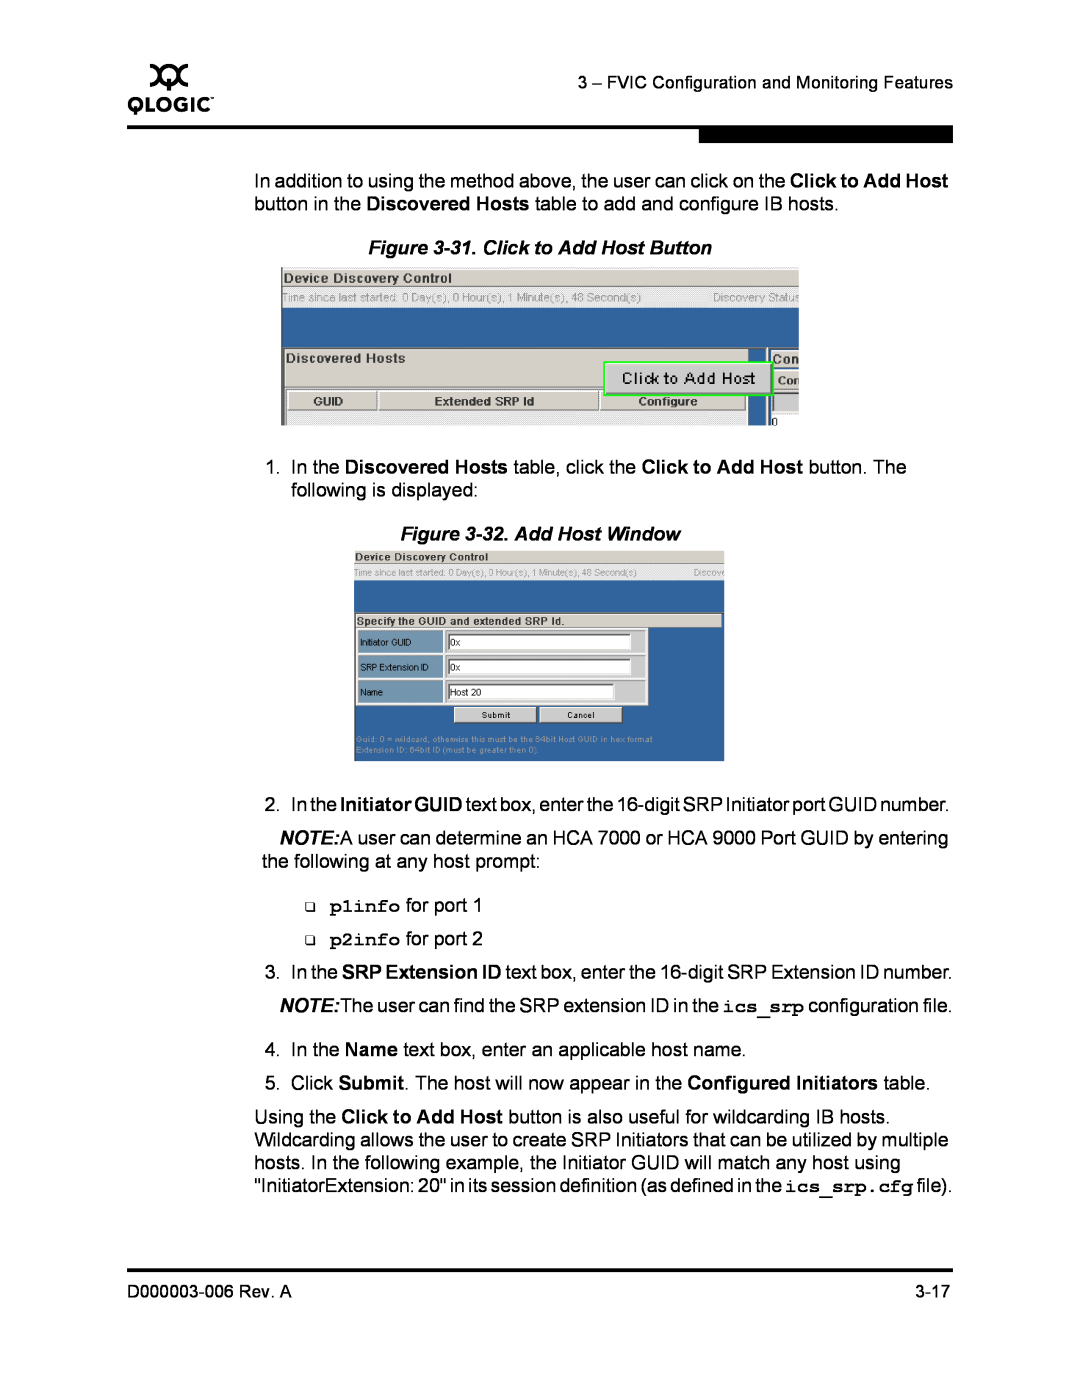 Q-Logic 9000 manual 31. Click to Add Host Button, 32. Add Host Window 